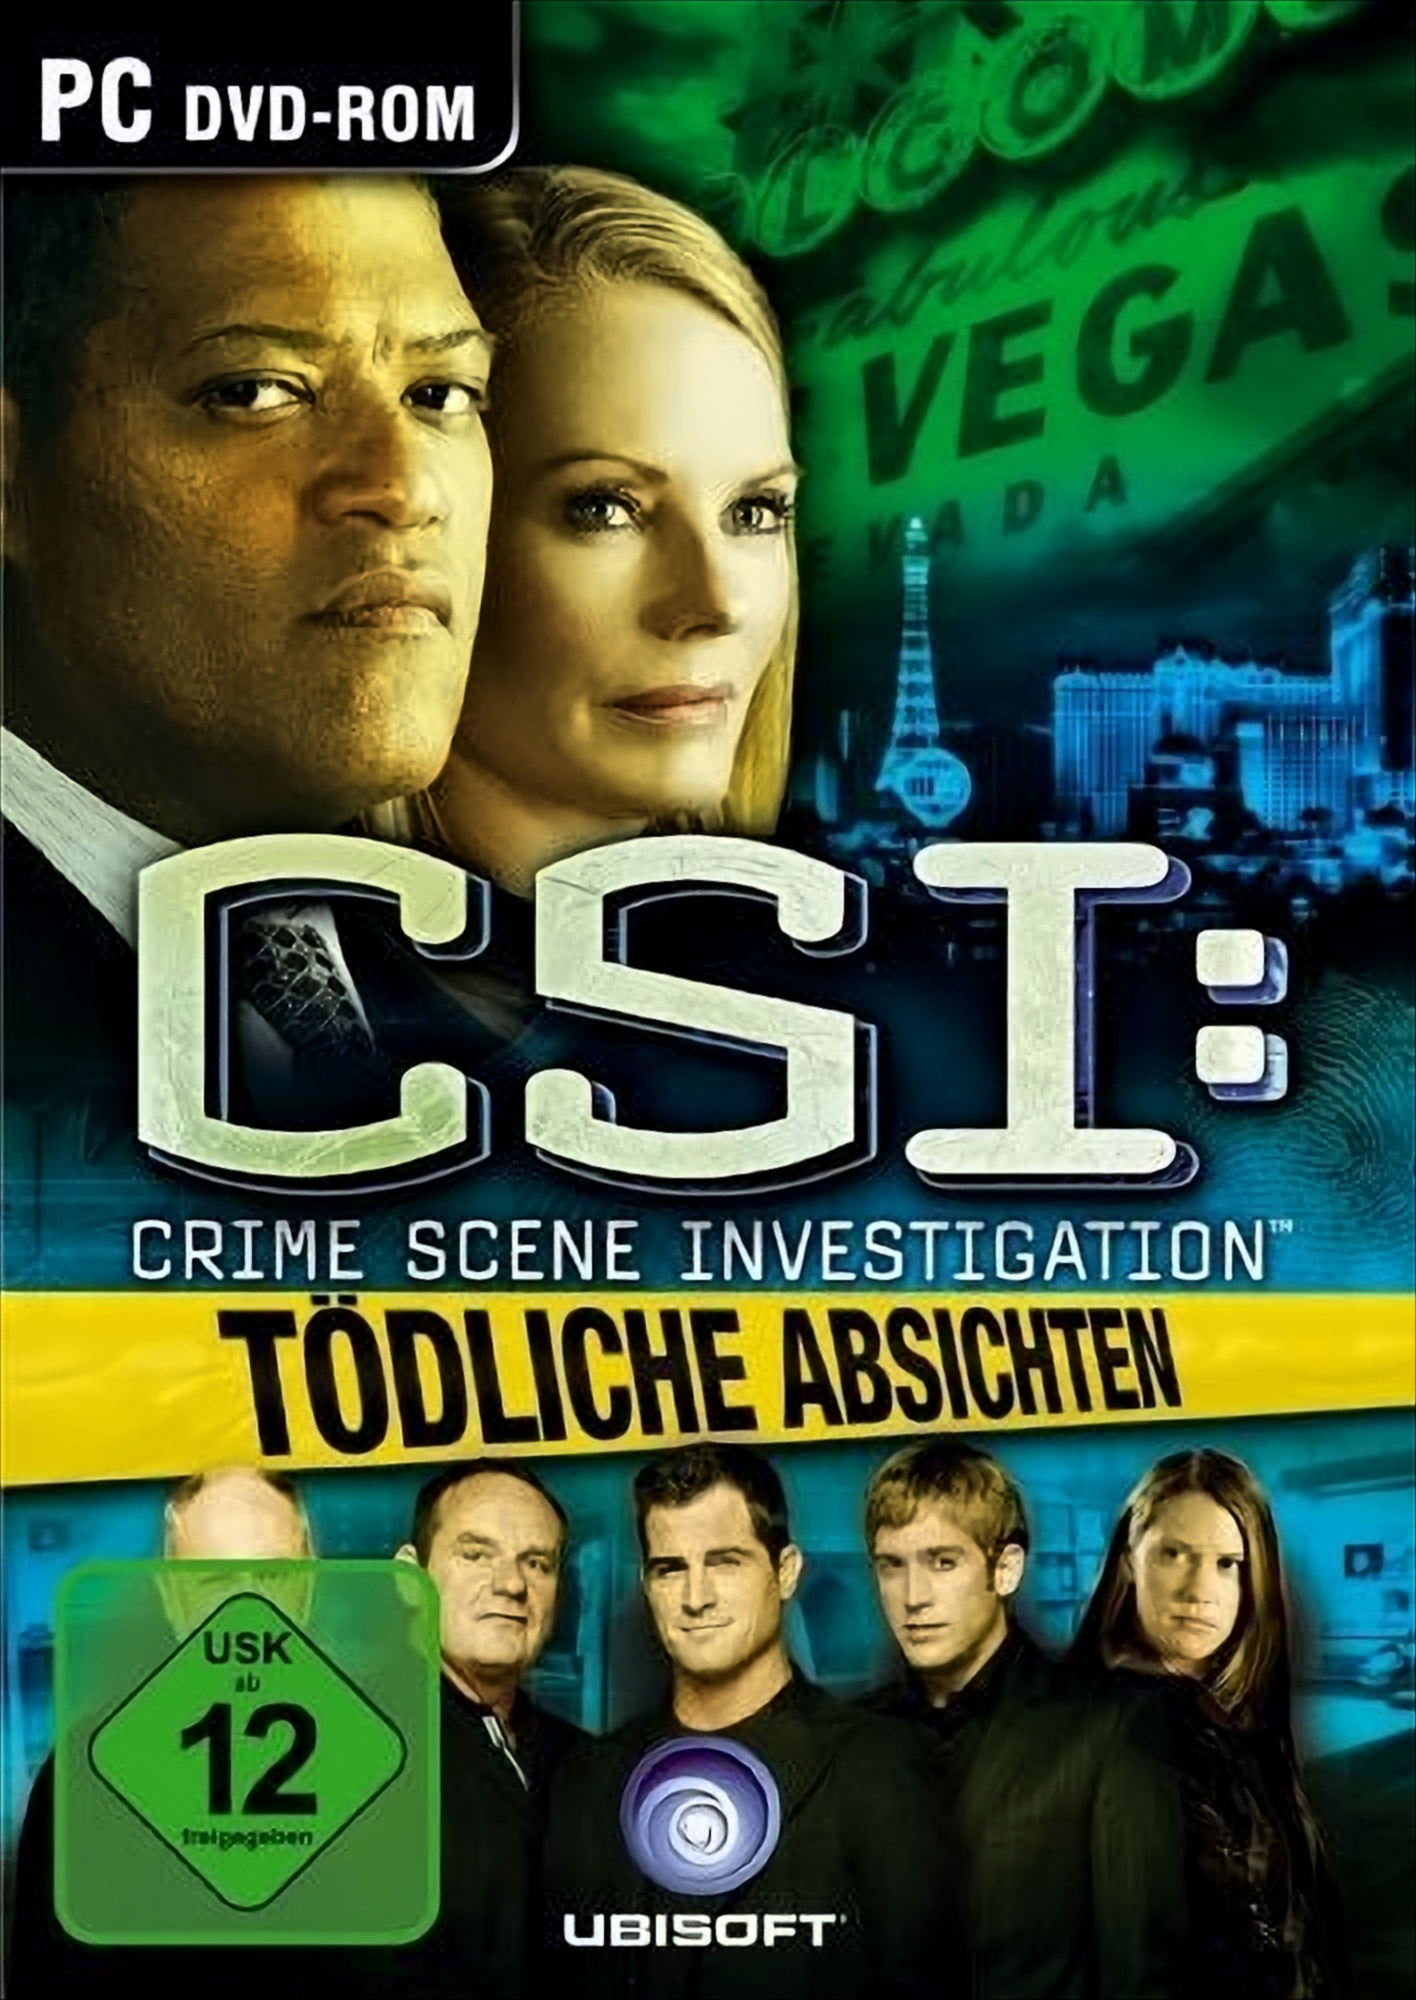 CSI - Absichten - Investigation: [PC] Crime Tödliche Scene